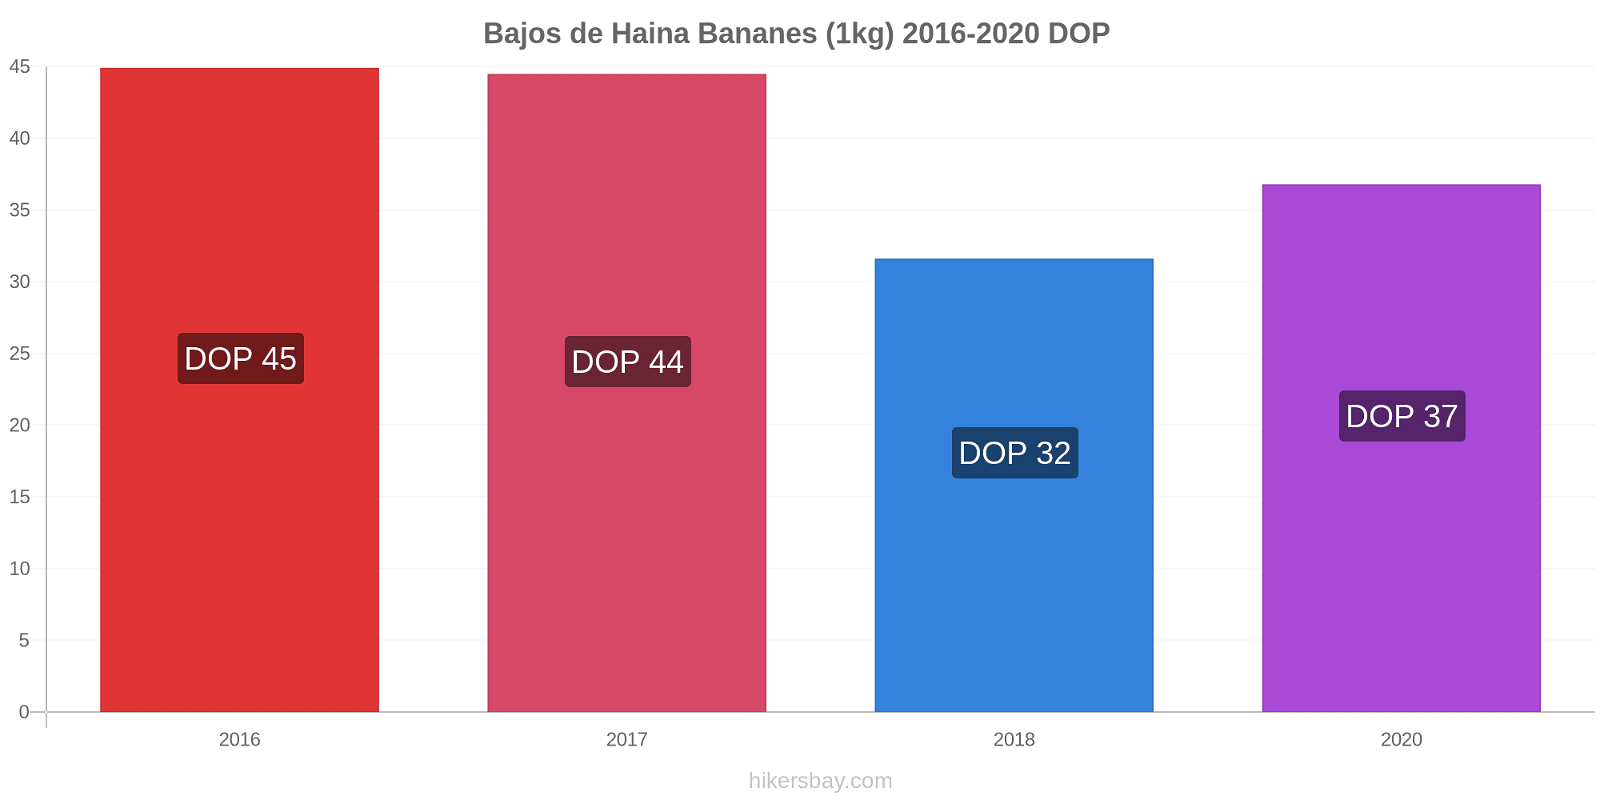 Bajos de Haina changements de prix Bananes (1kg) hikersbay.com